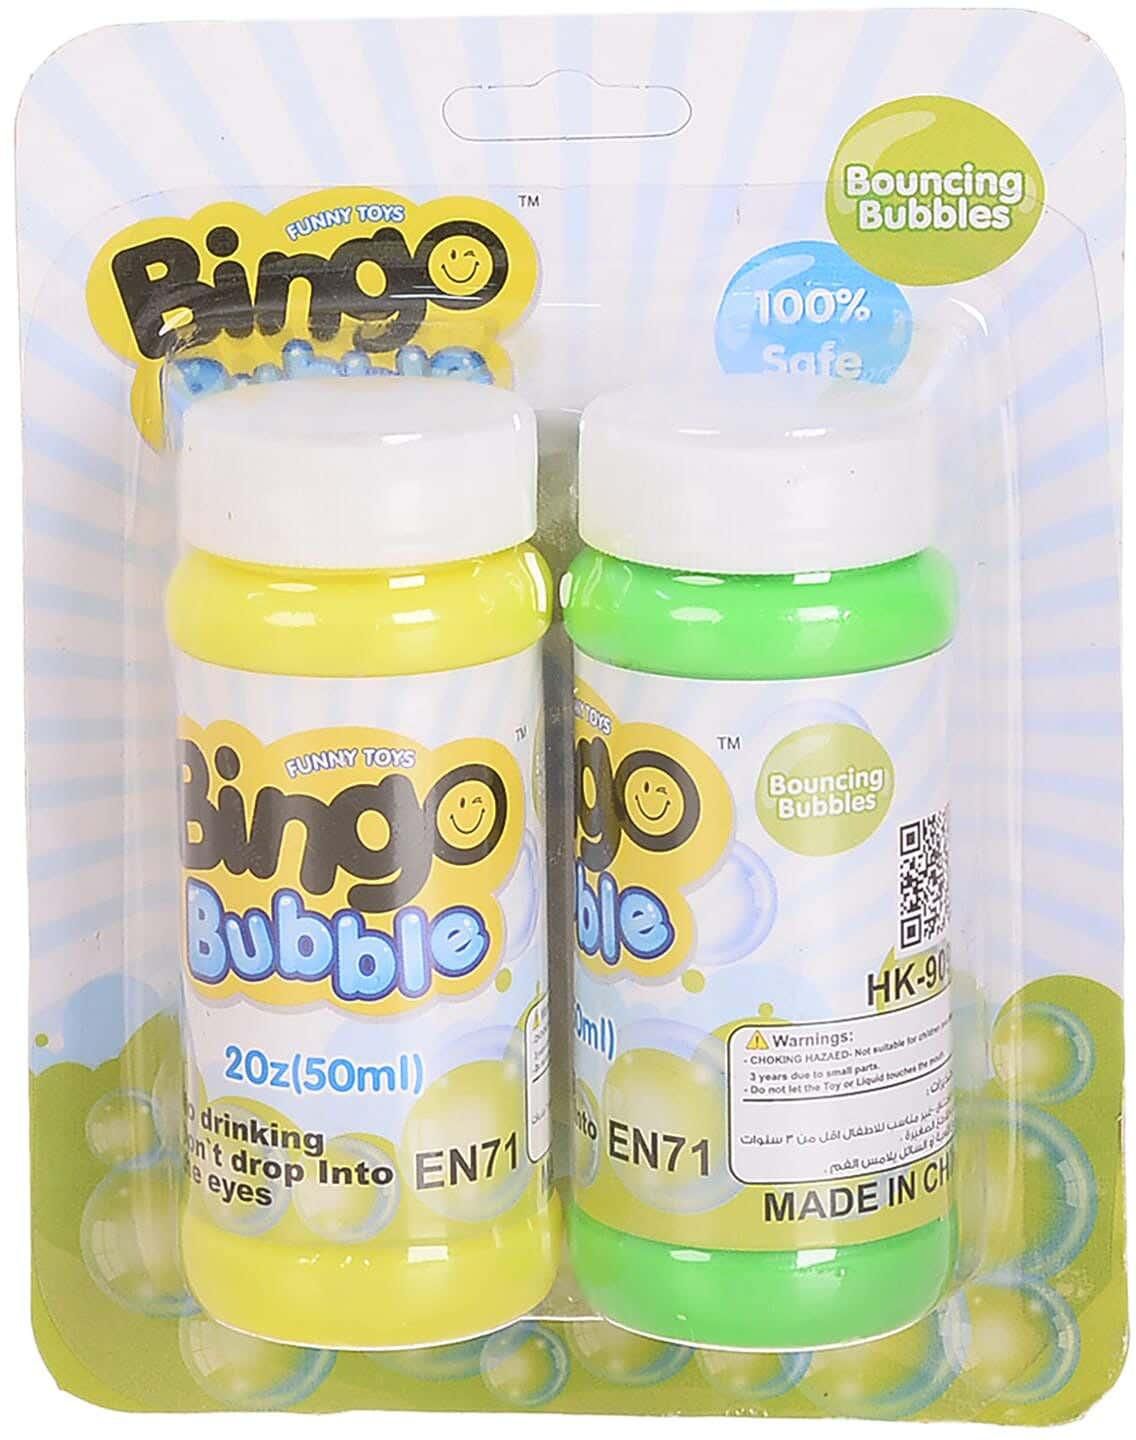 Get Bingo Plastic Bubble Maker Bottle, 2 Pieces - Multicolor with best offers | Raneen.com